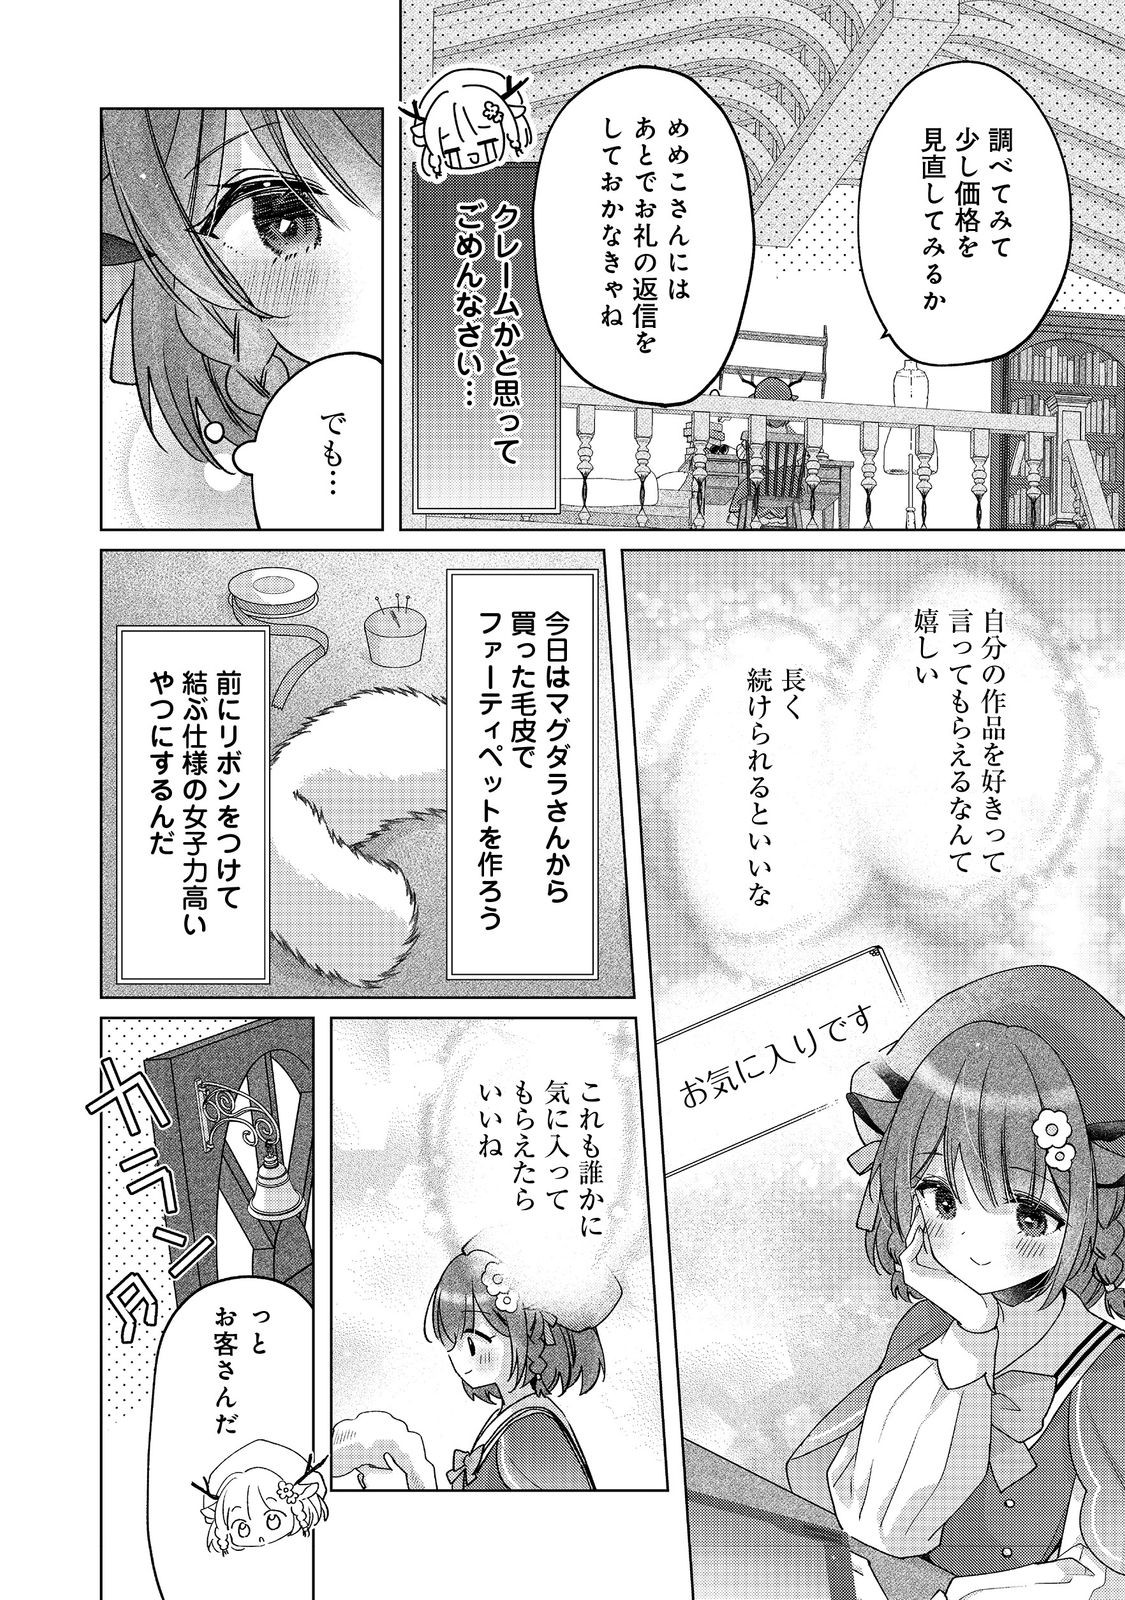 Shokugyou, Shitateya. Tantanto, VRMMO Jikkyou. - Chapter 3 - Page 4